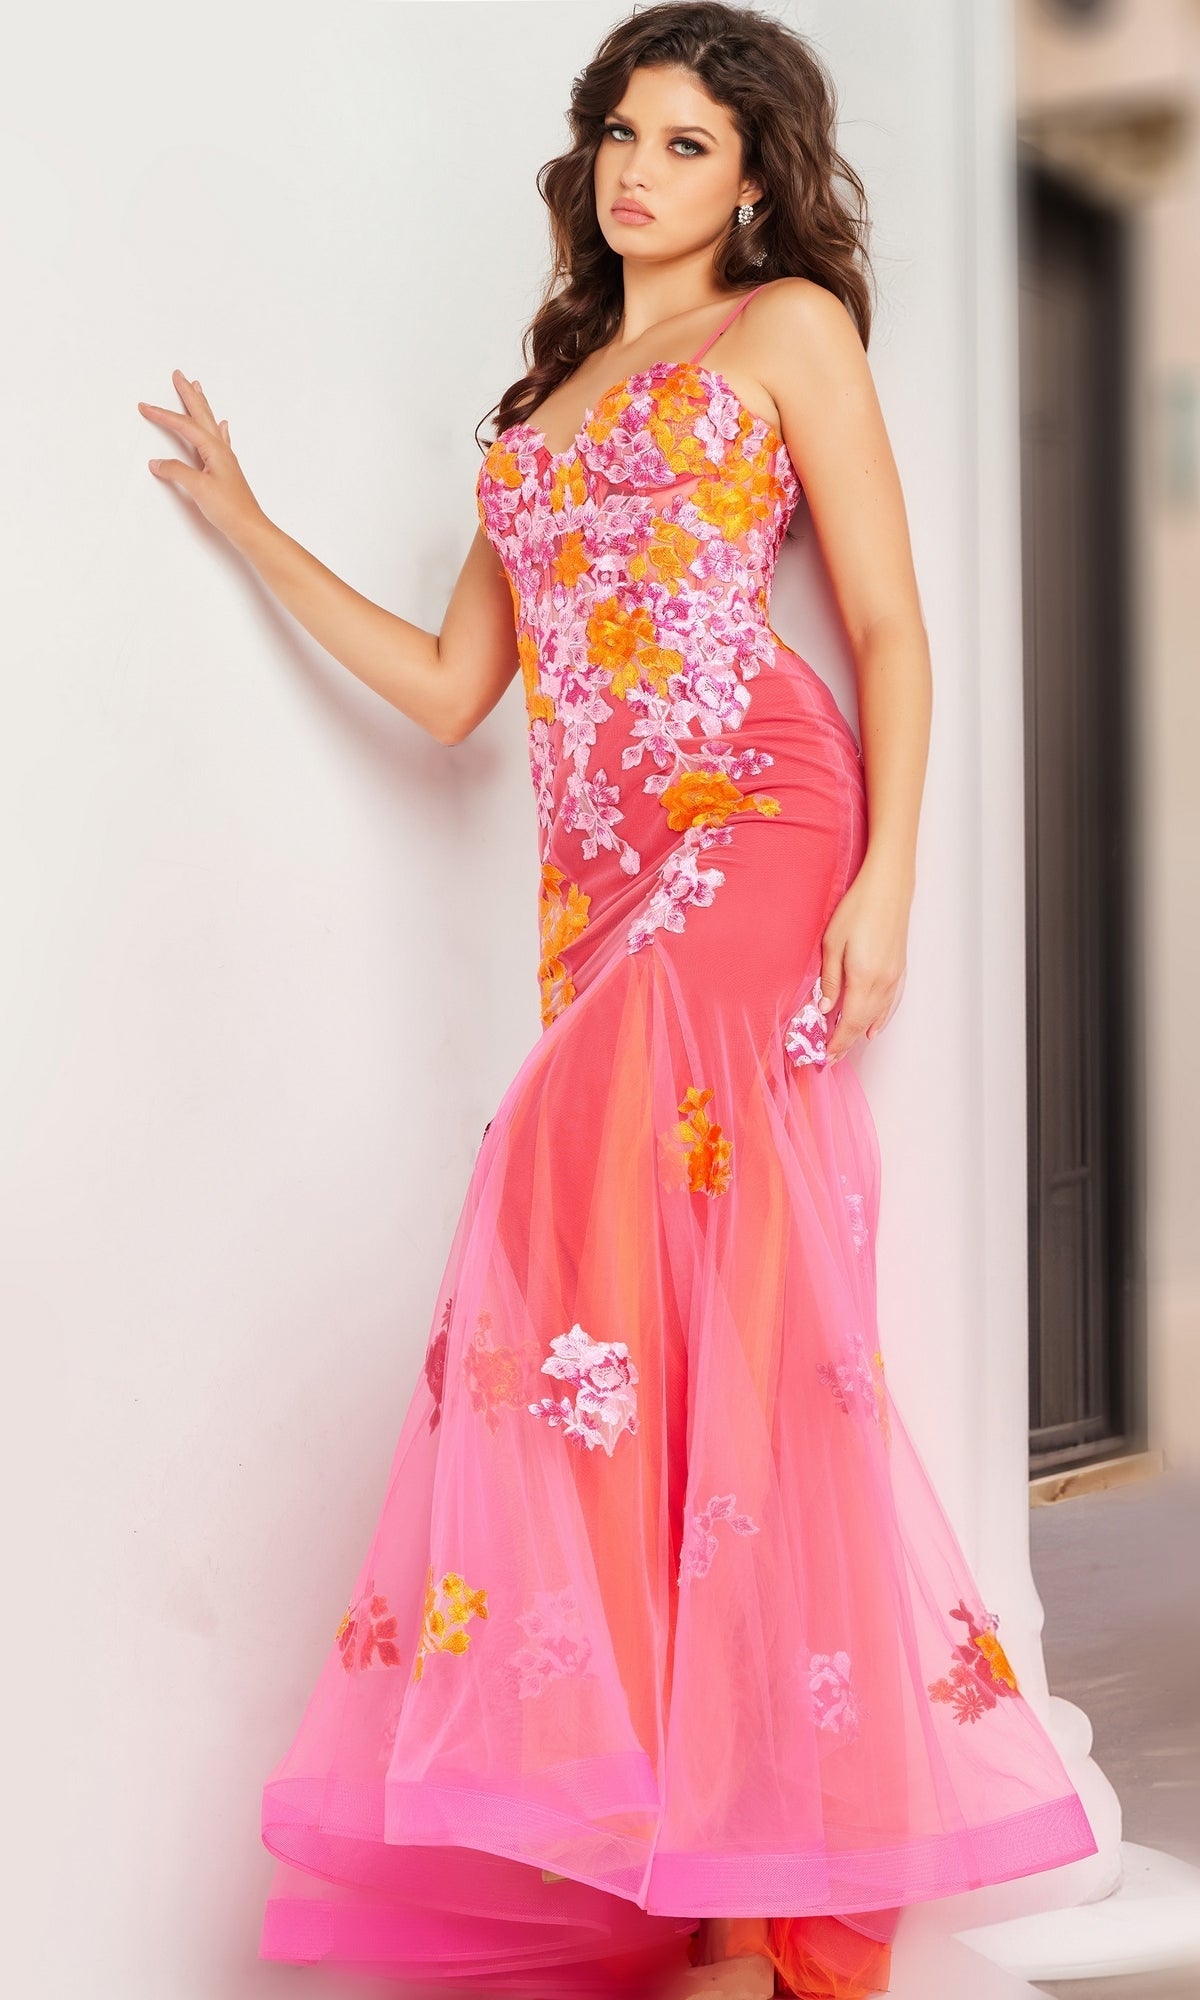  Formal Long Dress 36843 by Jovani